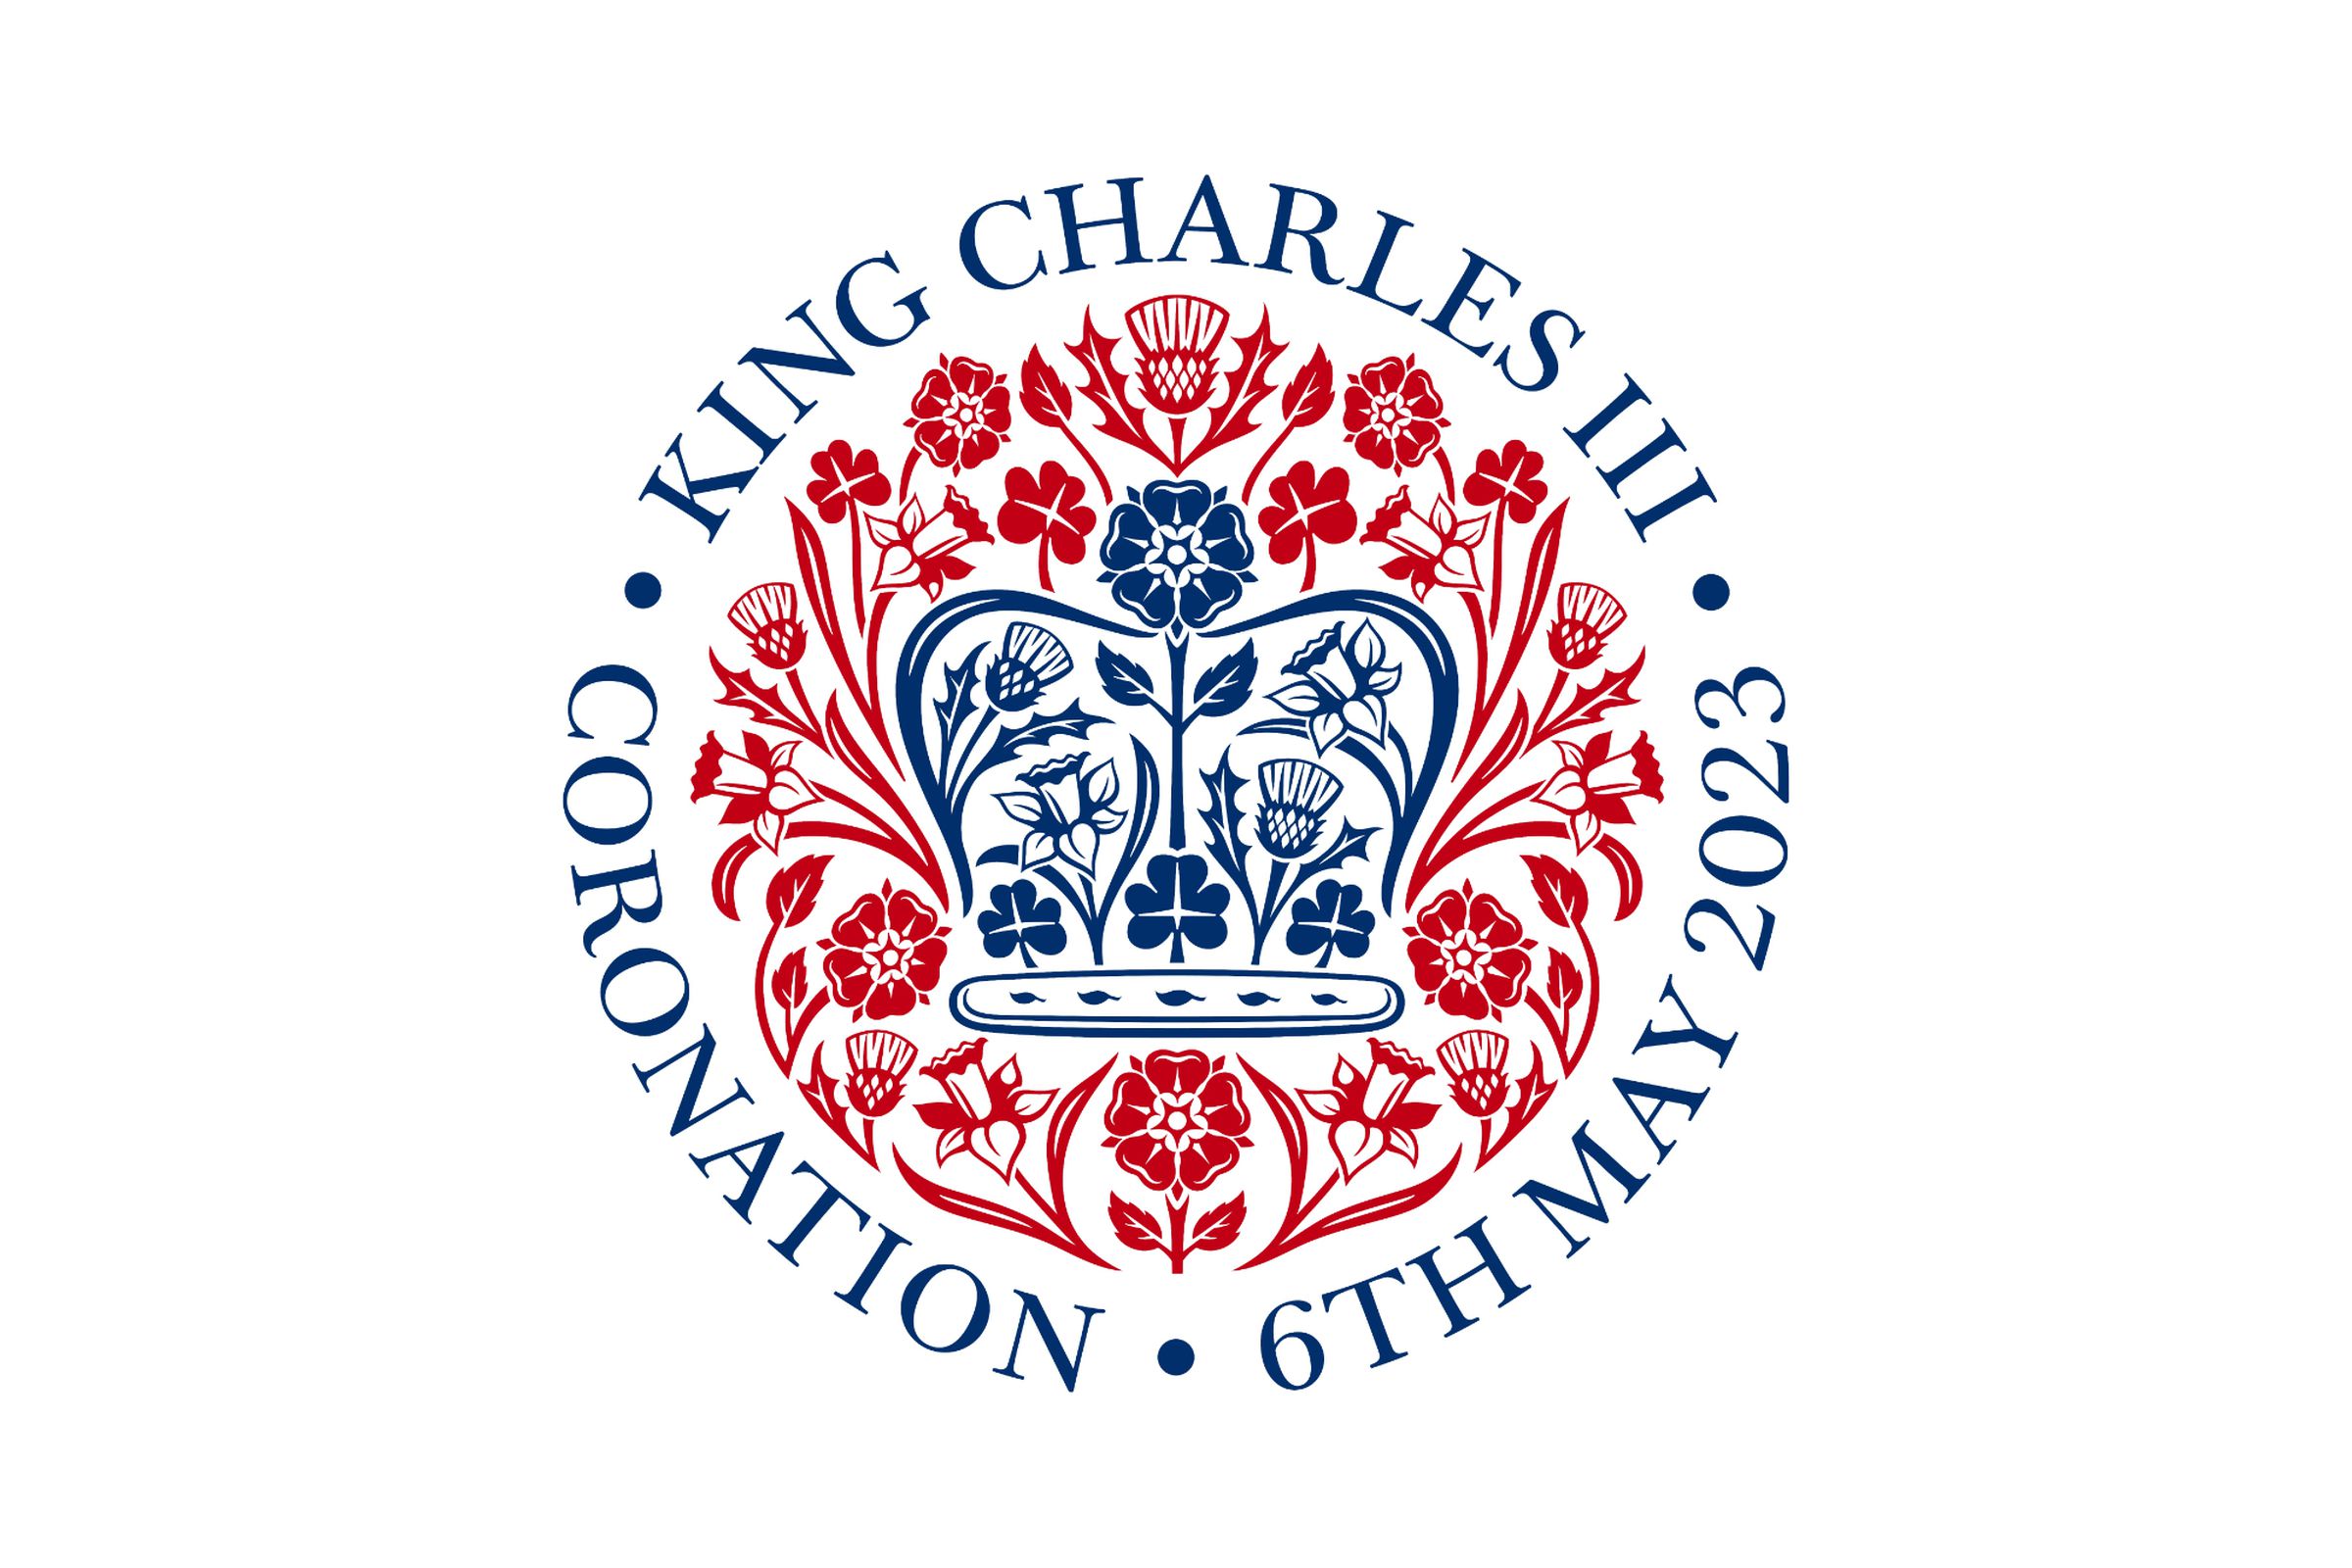 King Charles III’s coronation emblem.